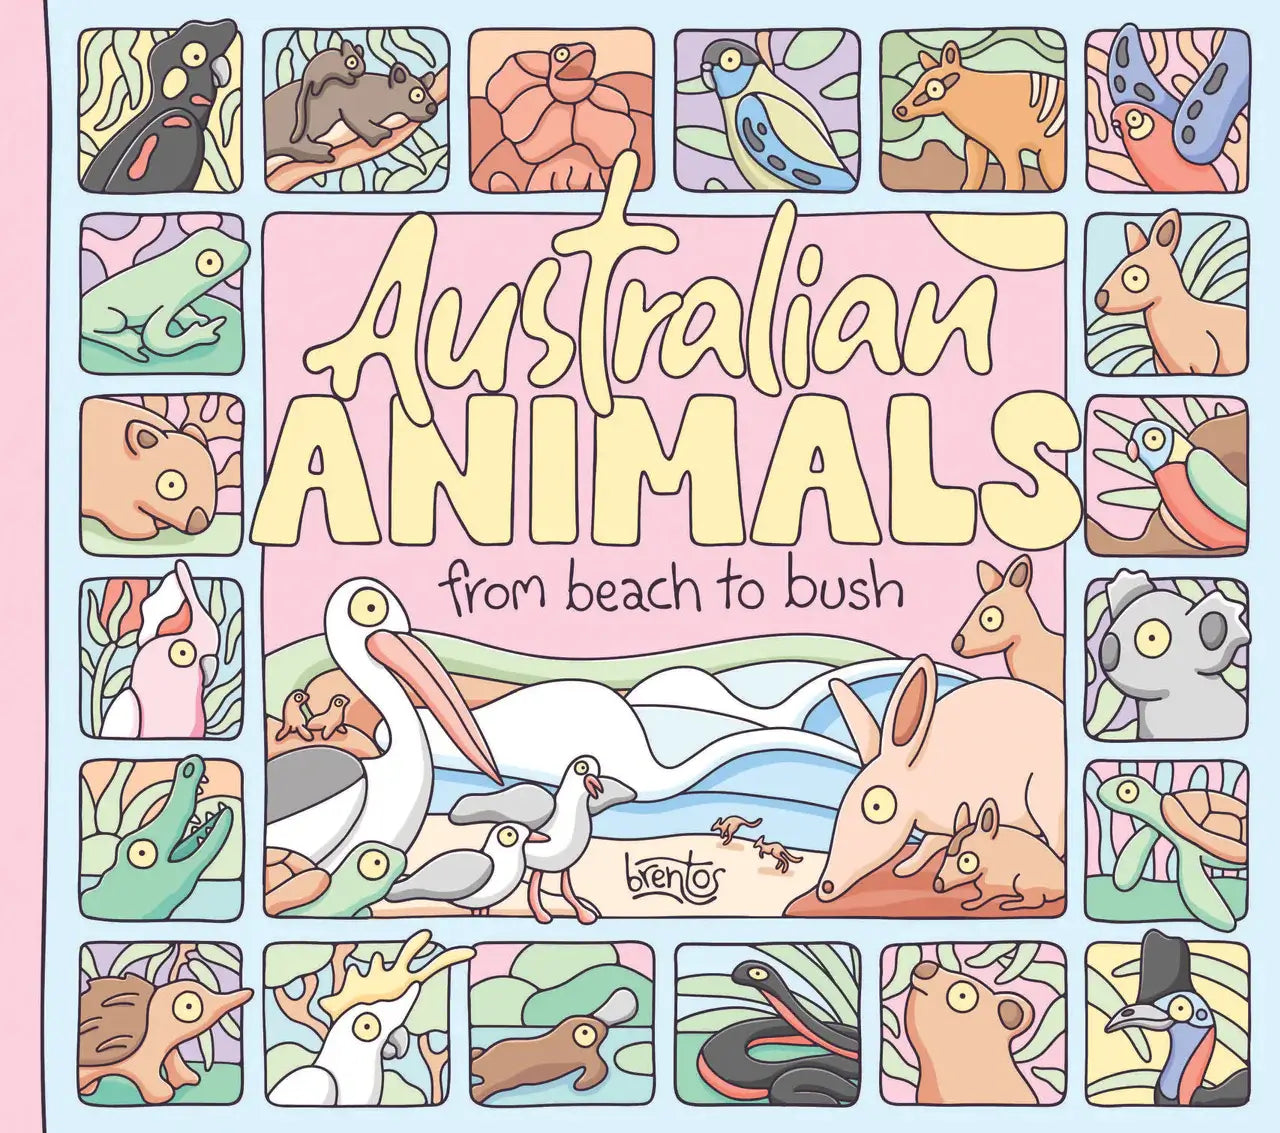 Australian Animals: From Beach to Bush